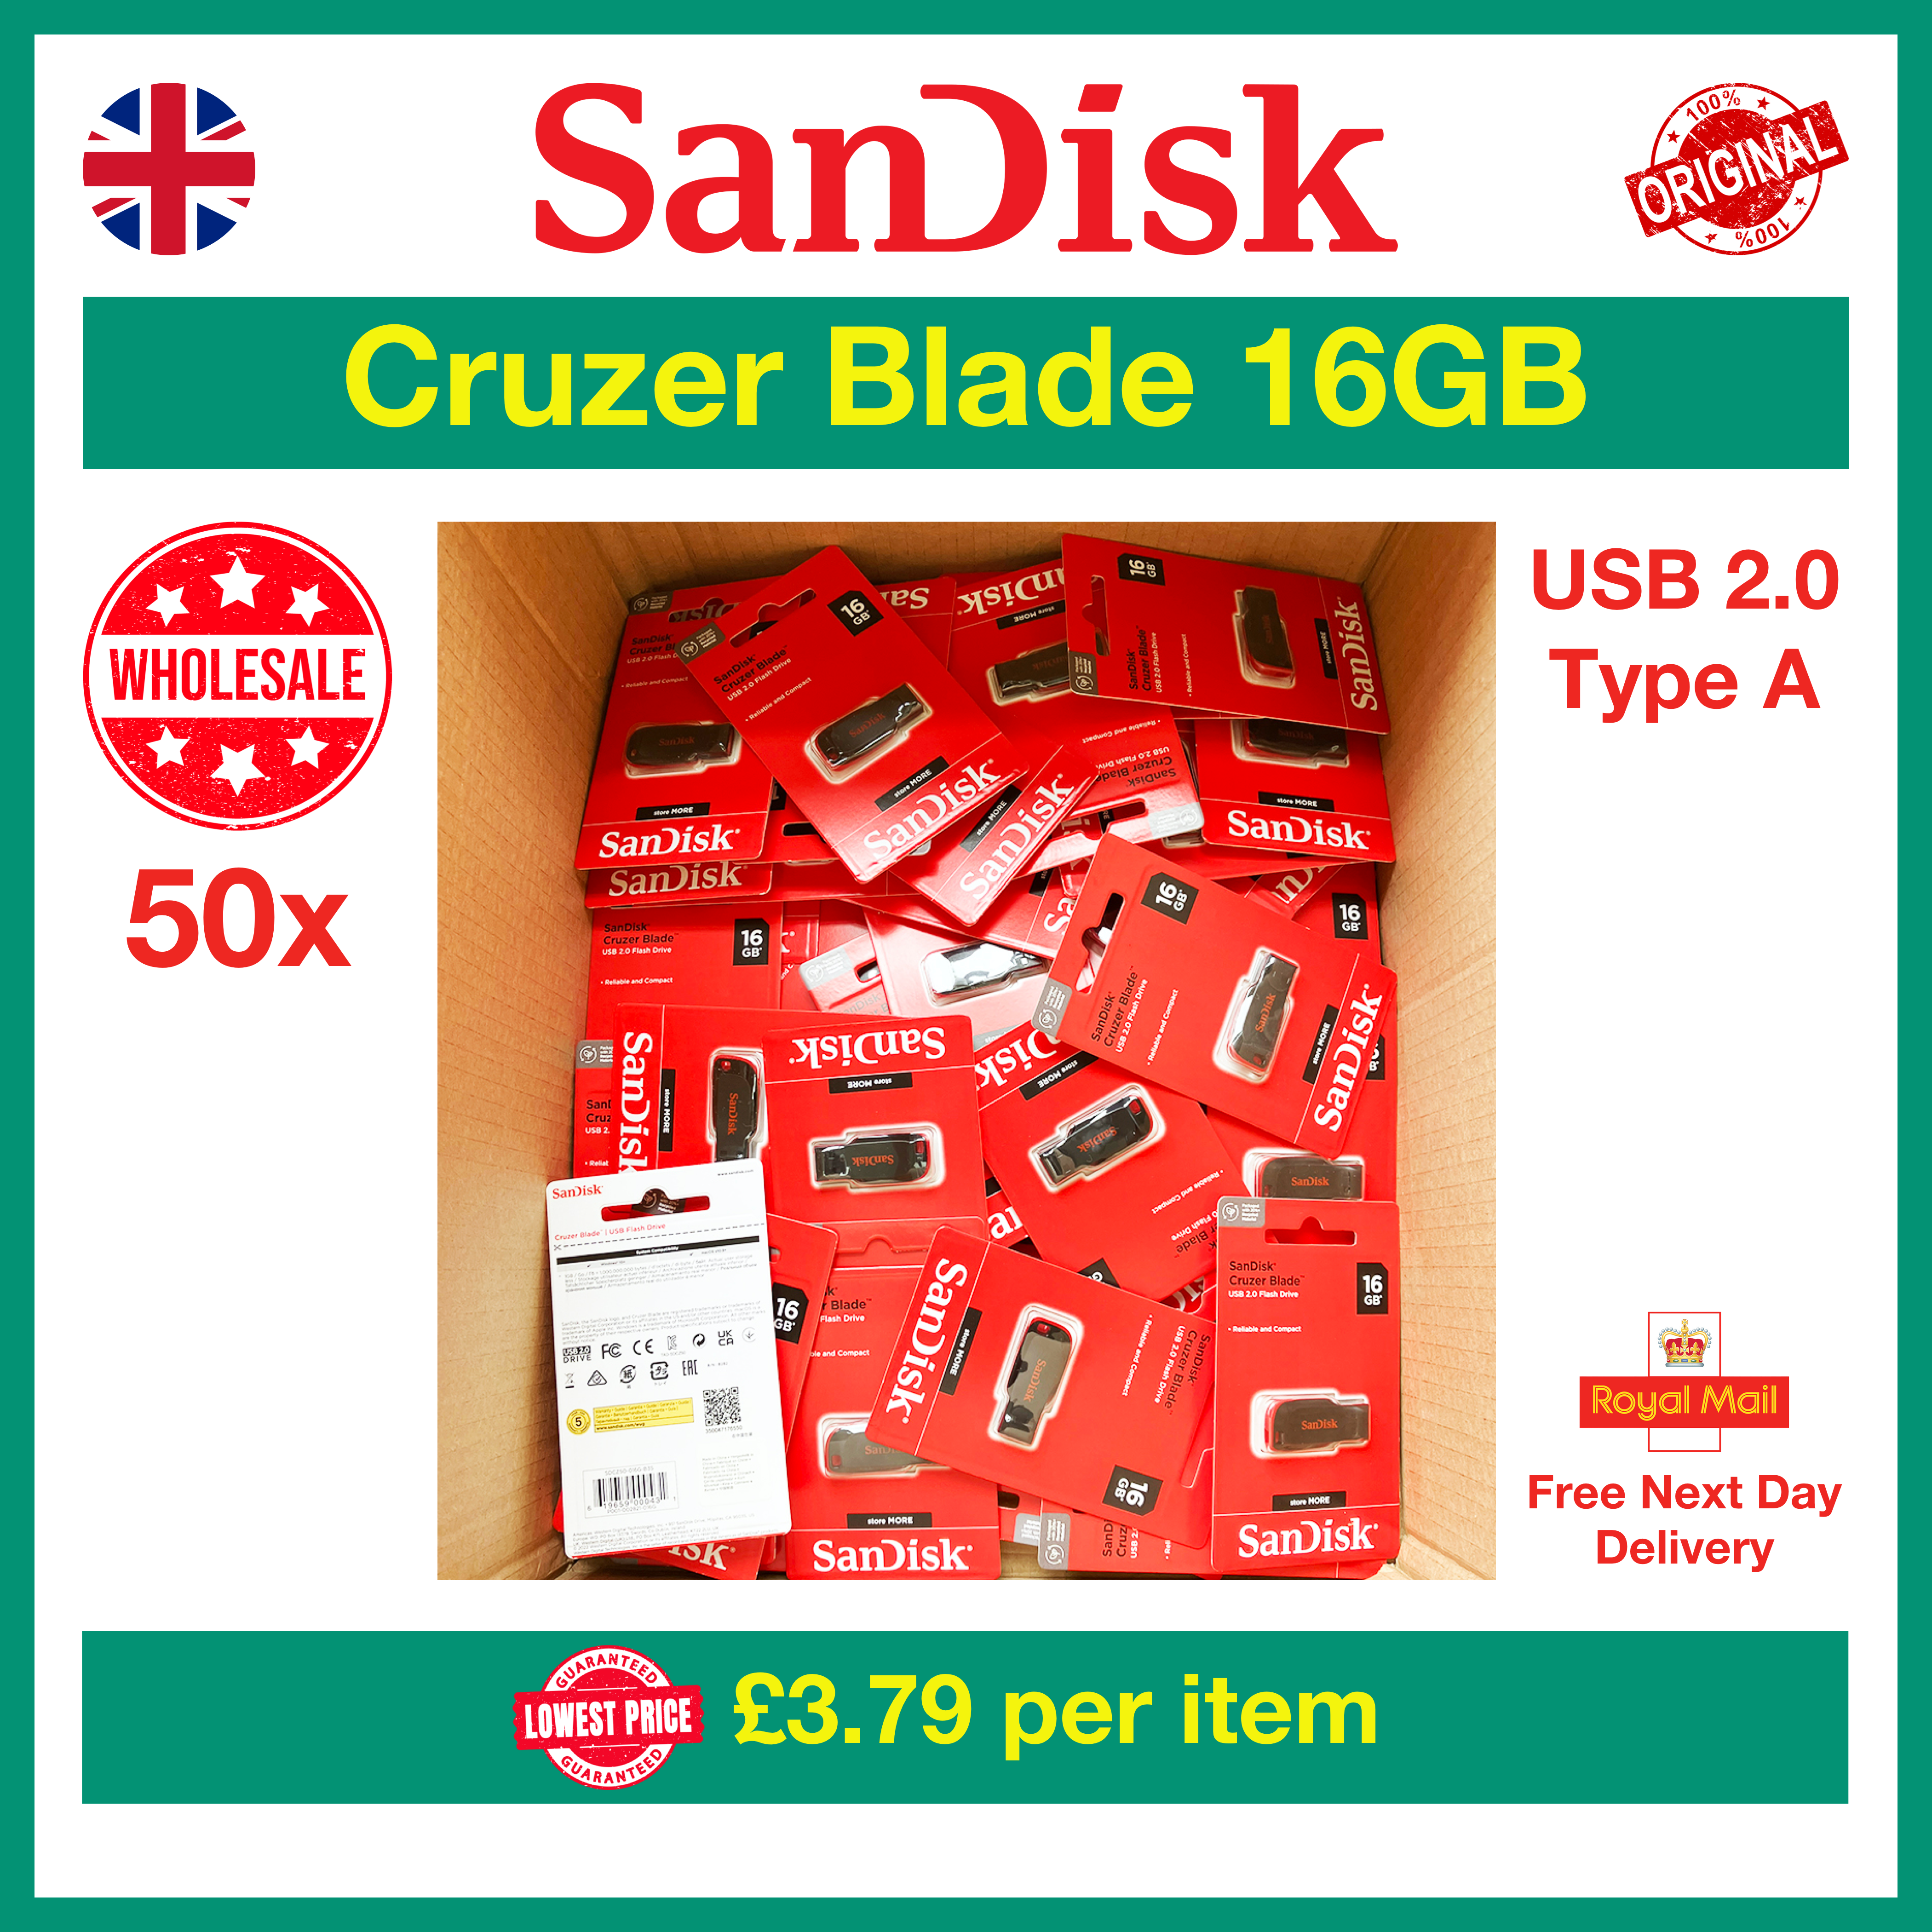 SanDisk Cruzer Blade 16GB USB Flash Drive Wholesale Bulk Deal, Lowest Price £3.79 per Item, MPN: SDCZ50-016G-B35, EAN: 0619659000431